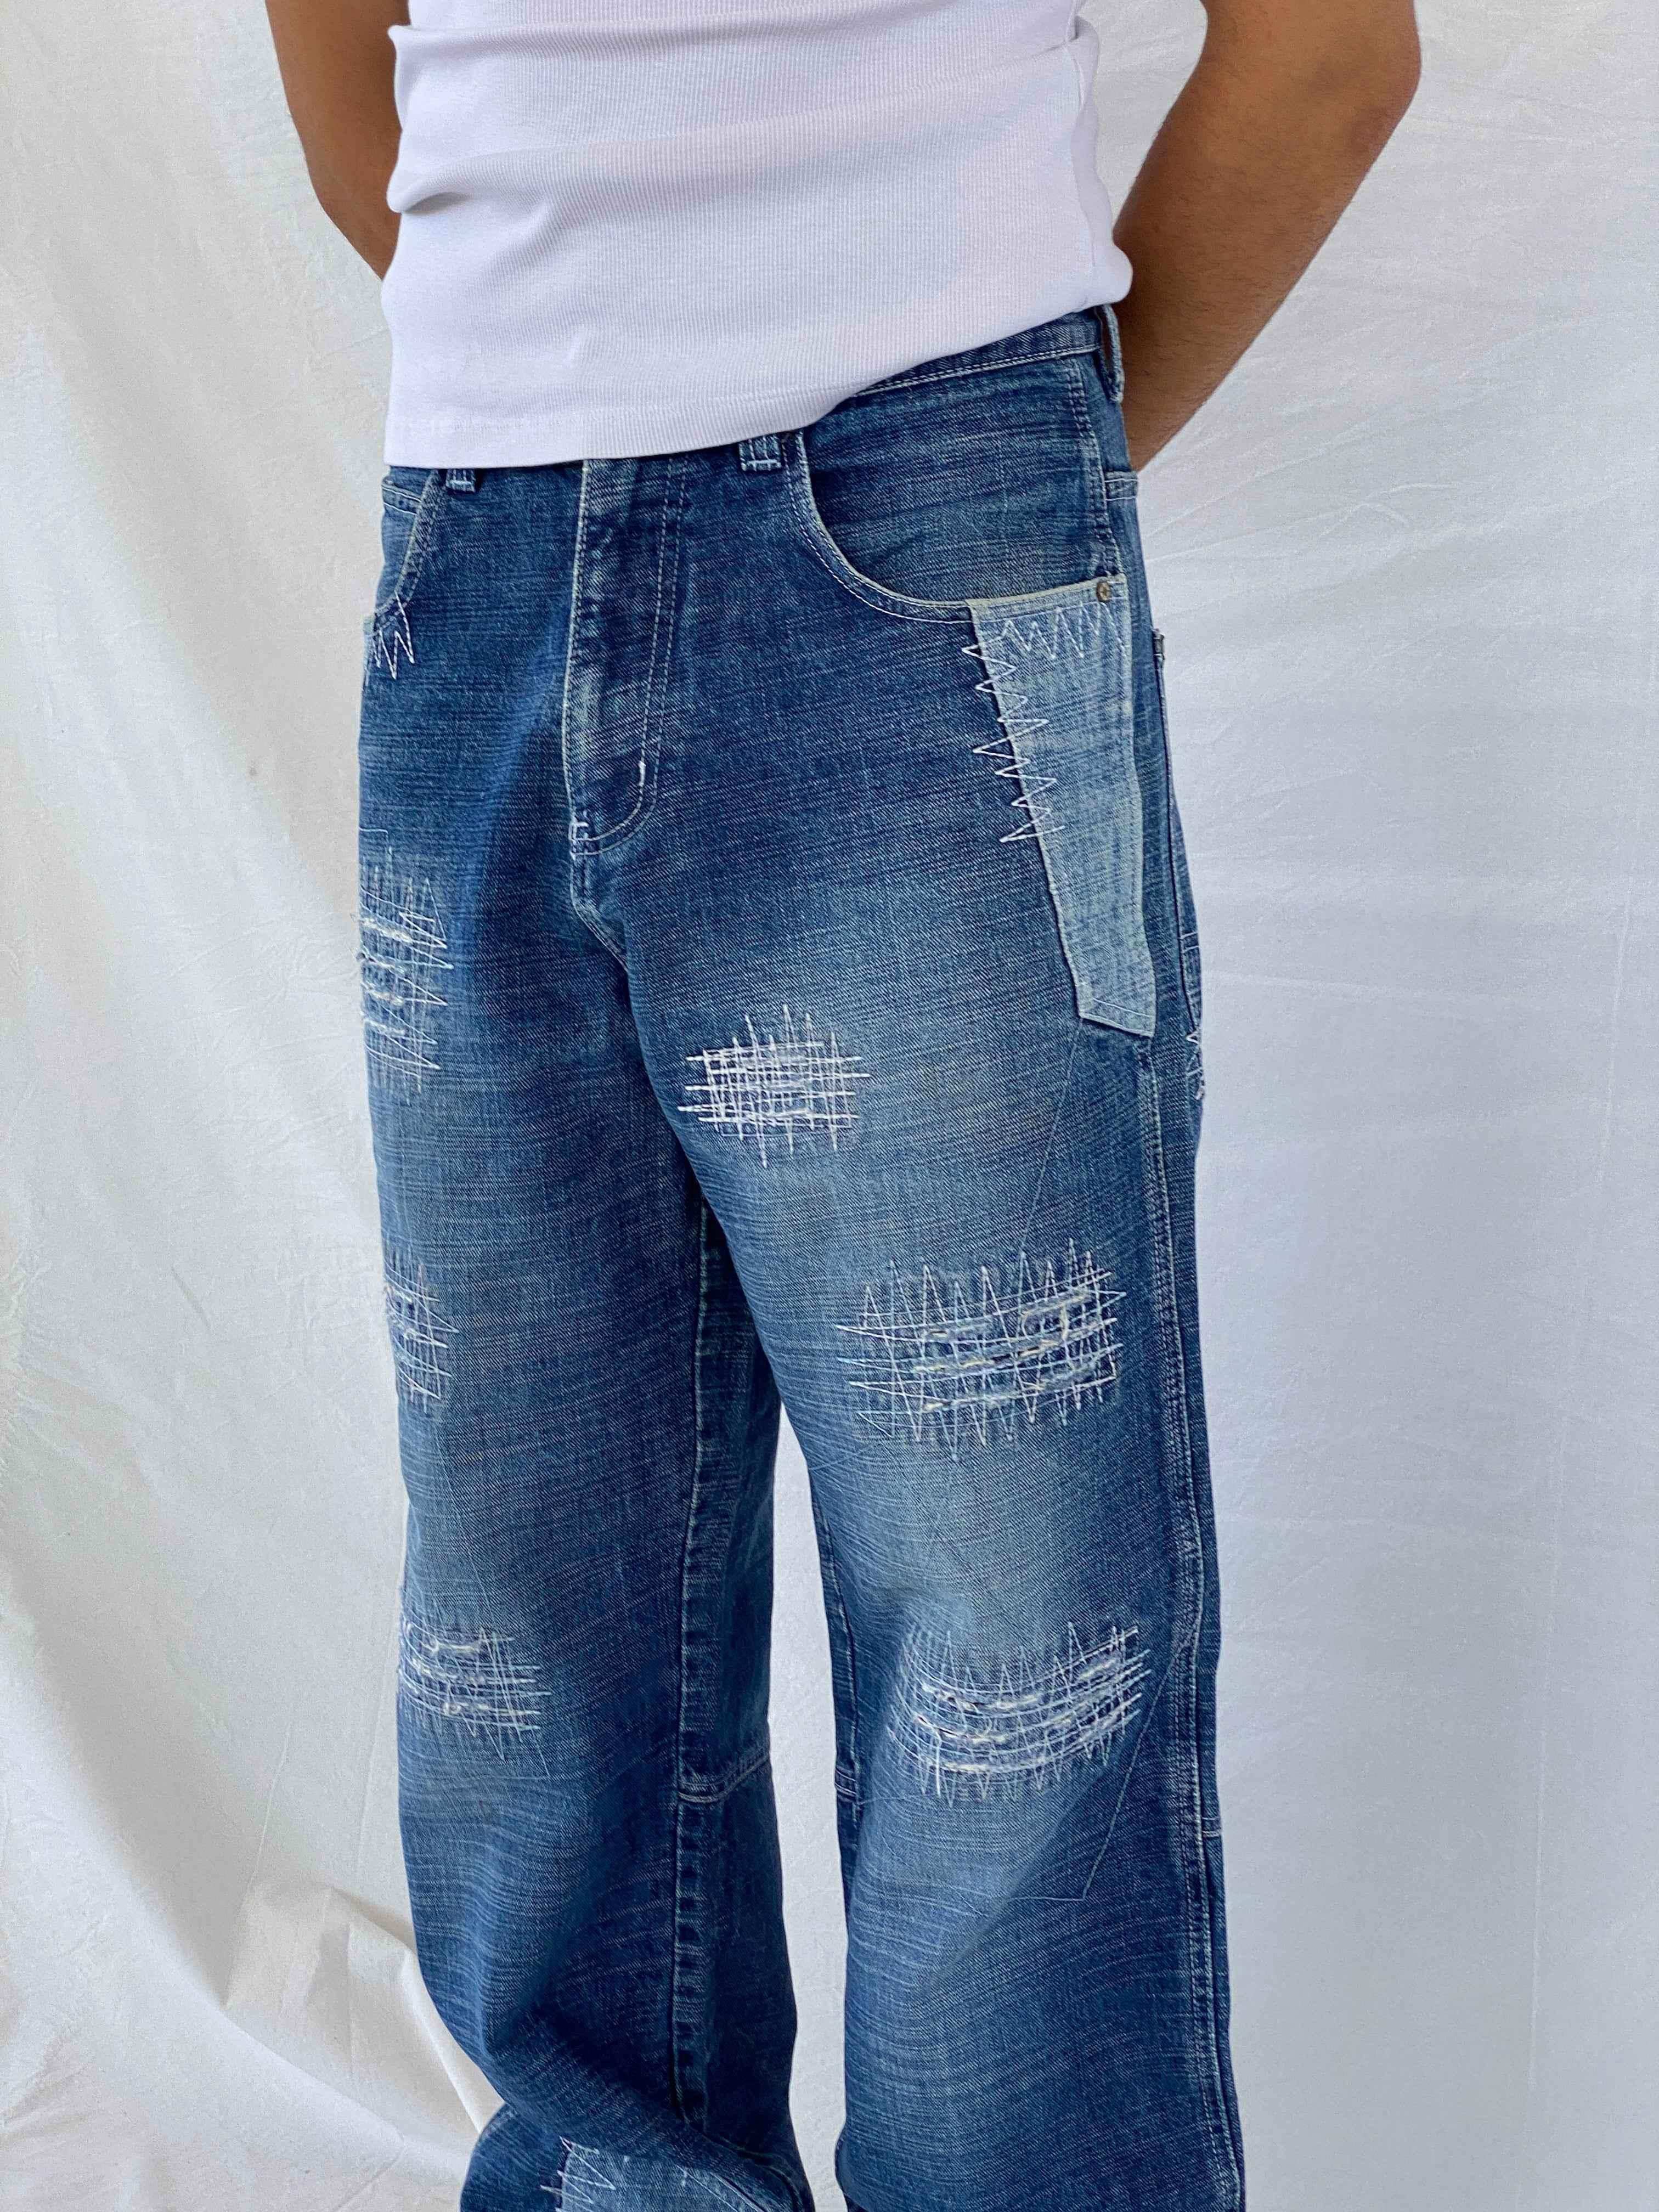 Vintage South Pole Jeans - Balagan Vintage Jeans 00s, 90s, Abdullah, denim, jeans, men, NEW IN